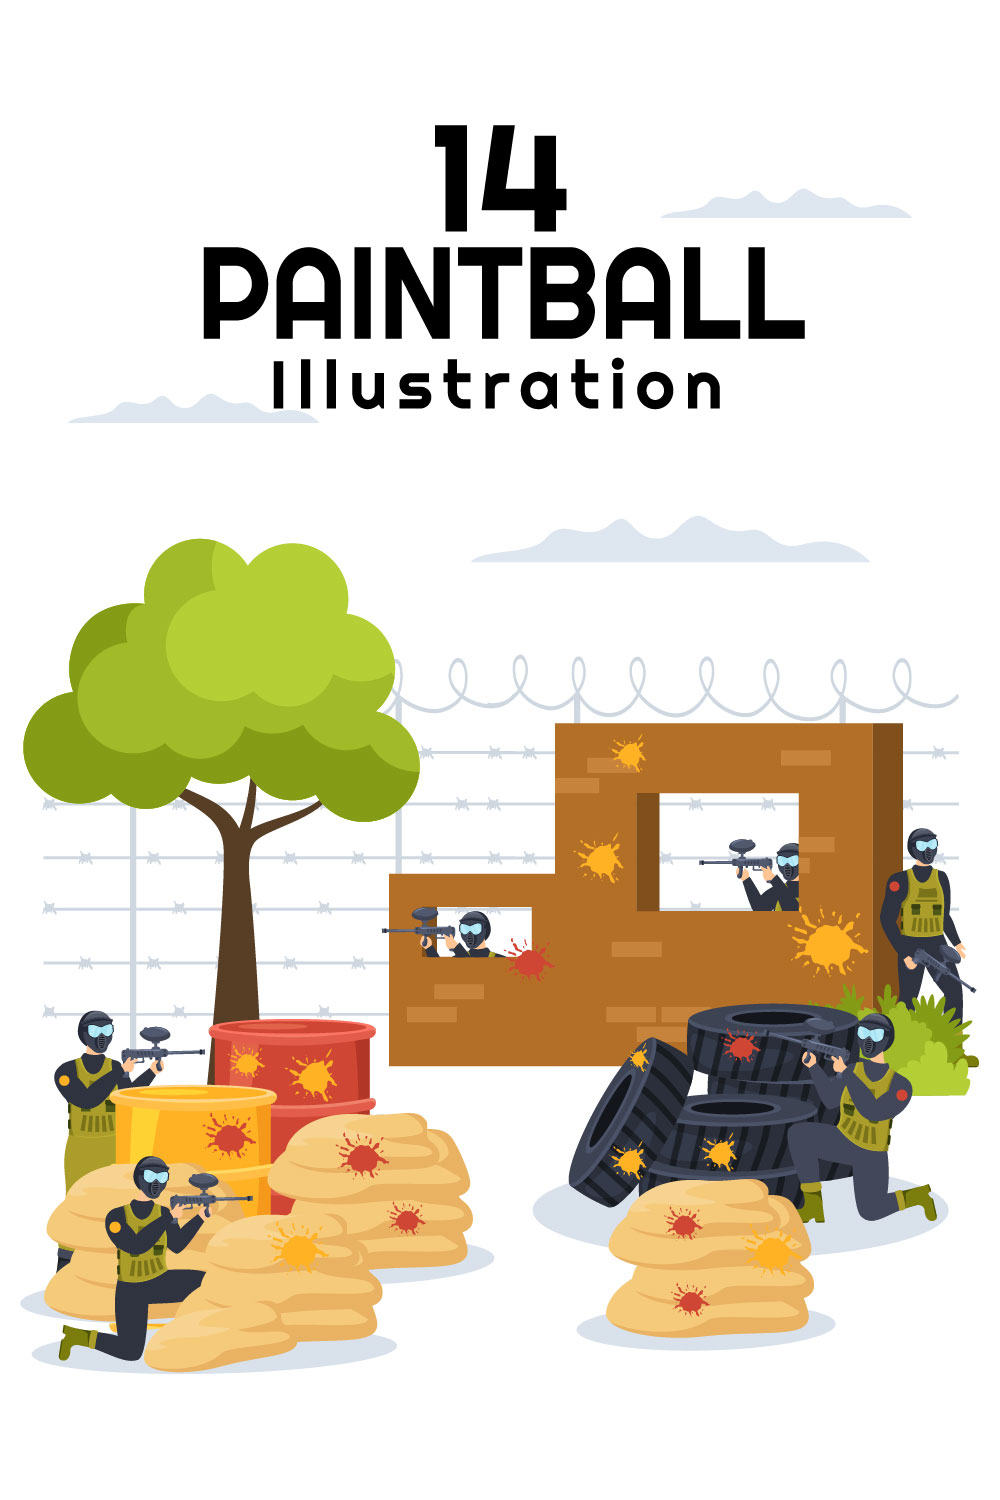 Game Paintball Design Illustration pinterest image.